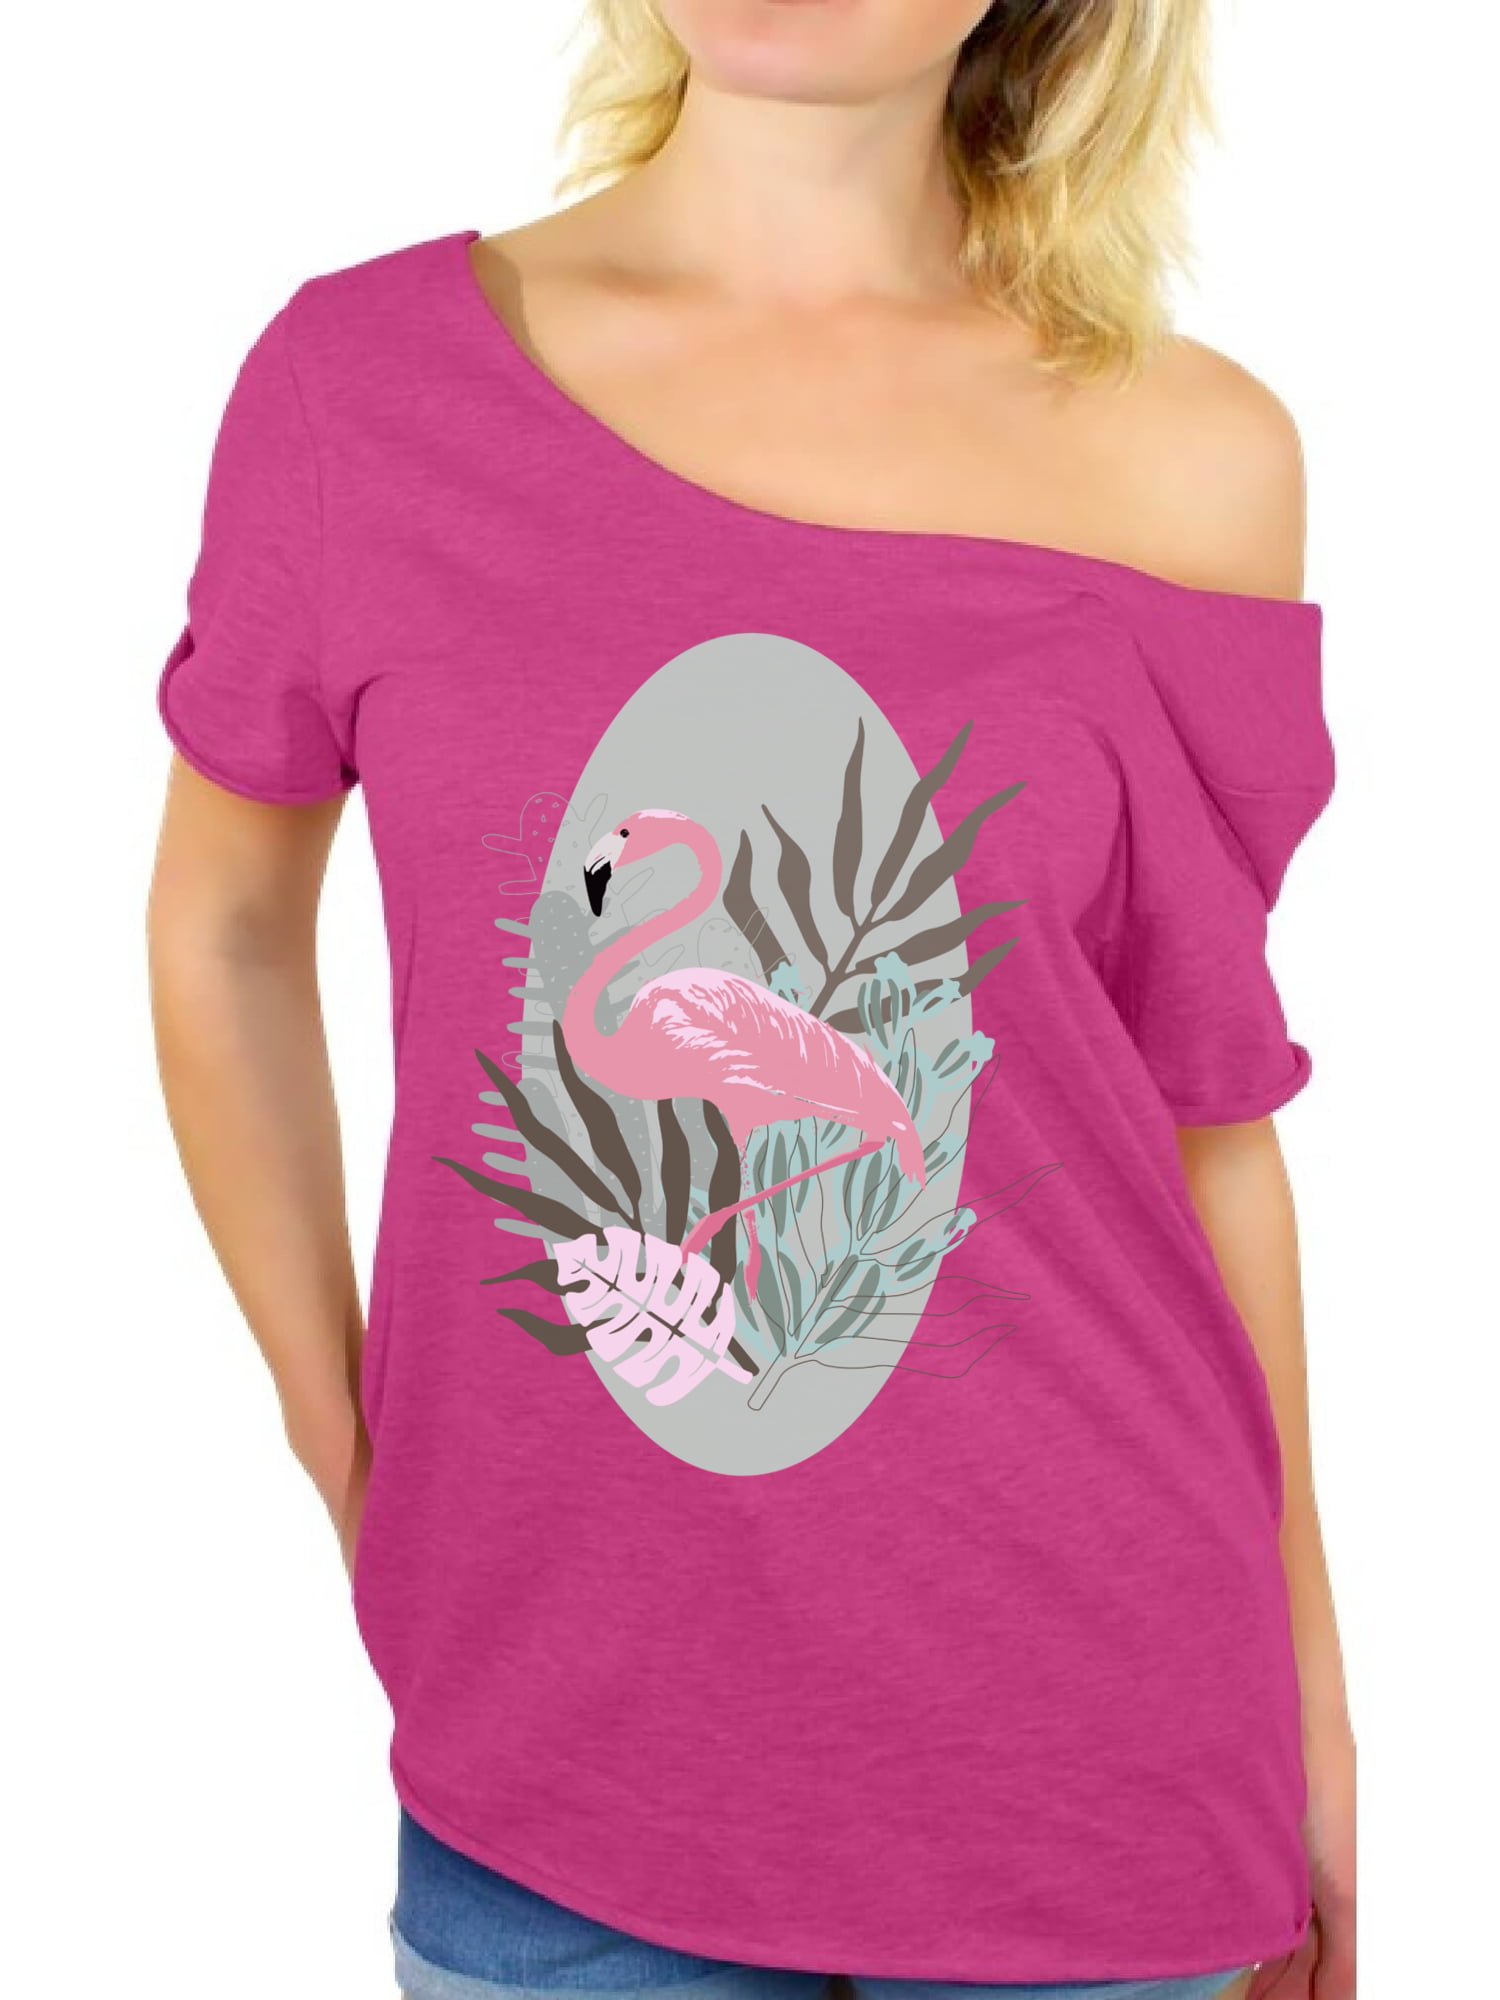 Supersoft Flamingo Lady Standard Women's T-shirt Standard Women's T-shirt